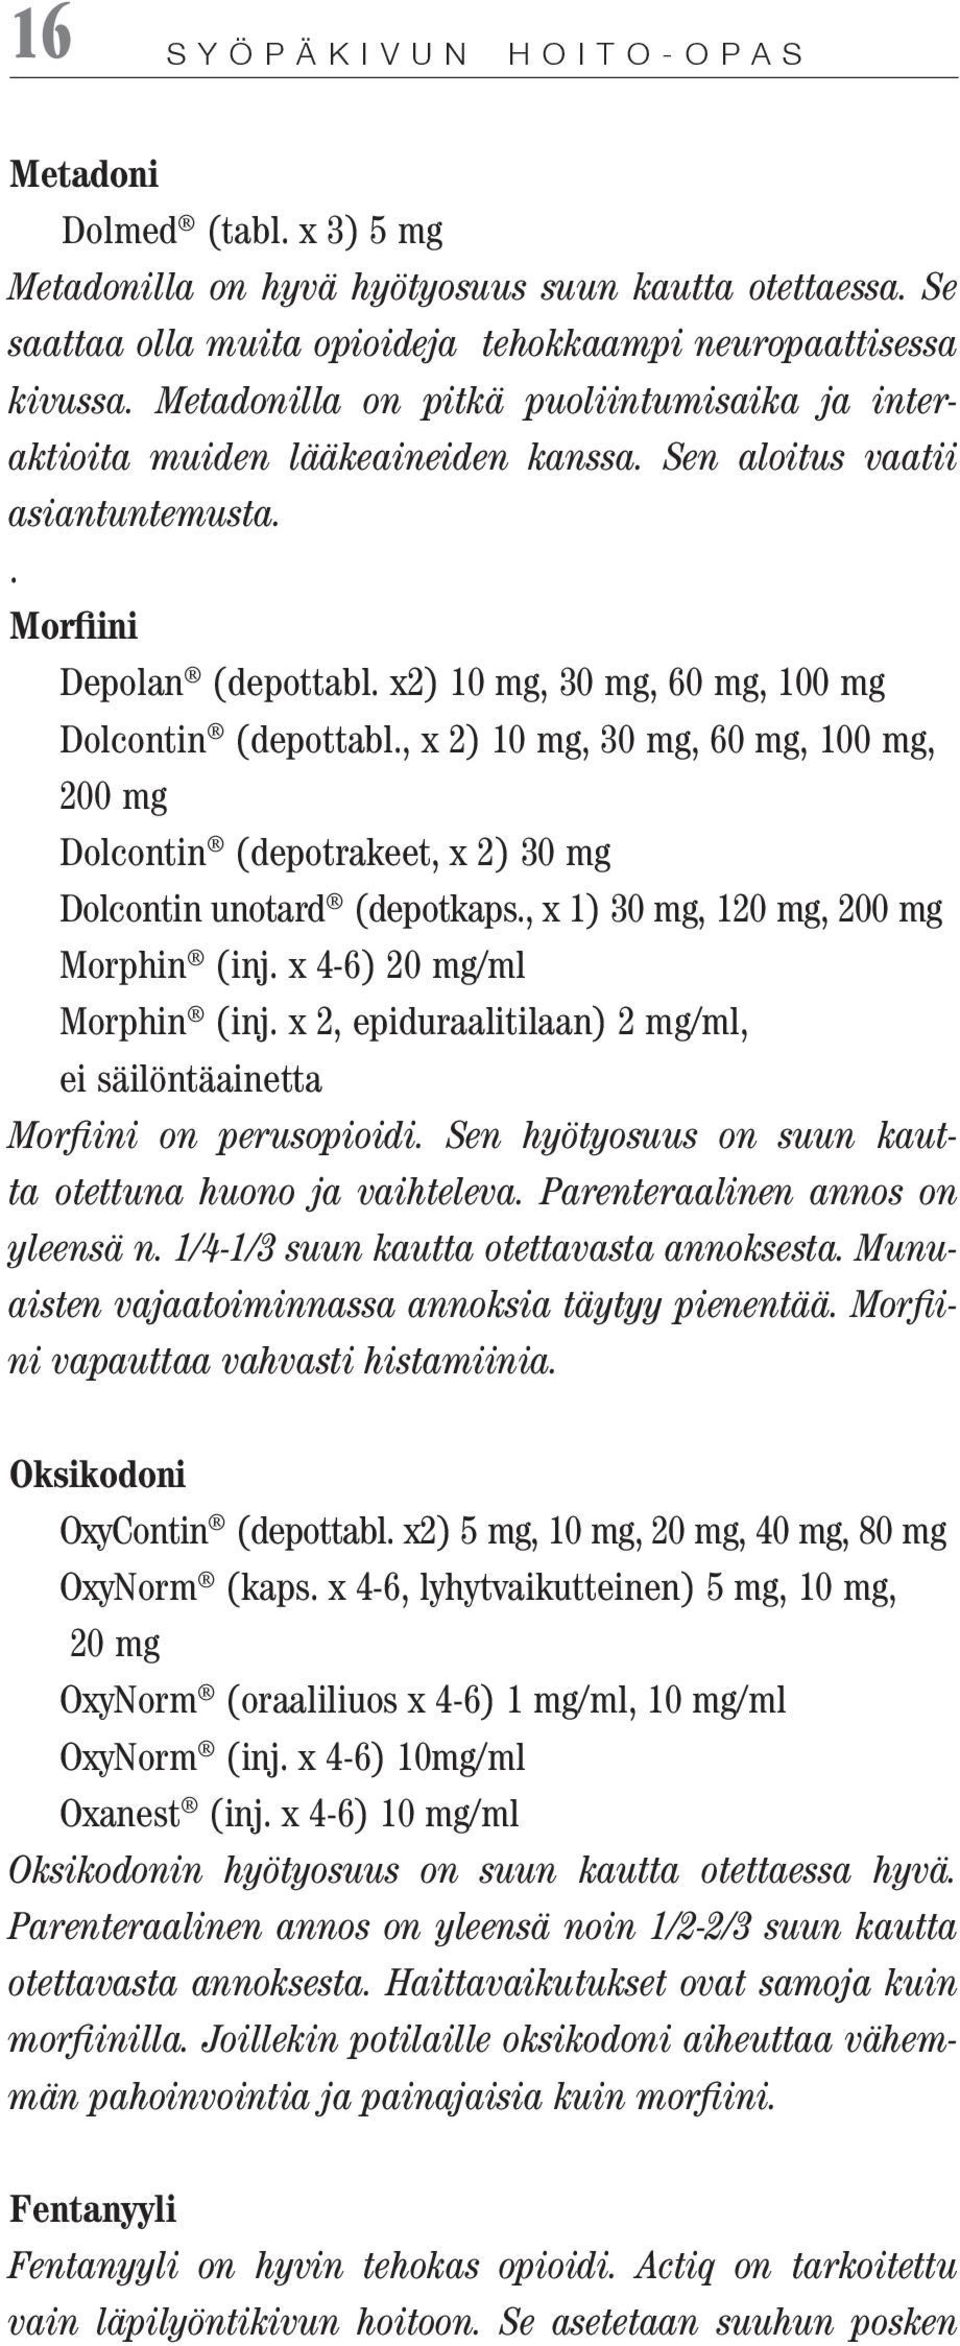 x2) 10 mg, 30 mg, 60 mg, 100 mg Dolcontin (depottabl., x 2) 10 mg, 30 mg, 60 mg, 100 mg, 200 mg Dolcontin (depotrakeet, x 2) 30 mg Dolcontin unotard (depotkaps.